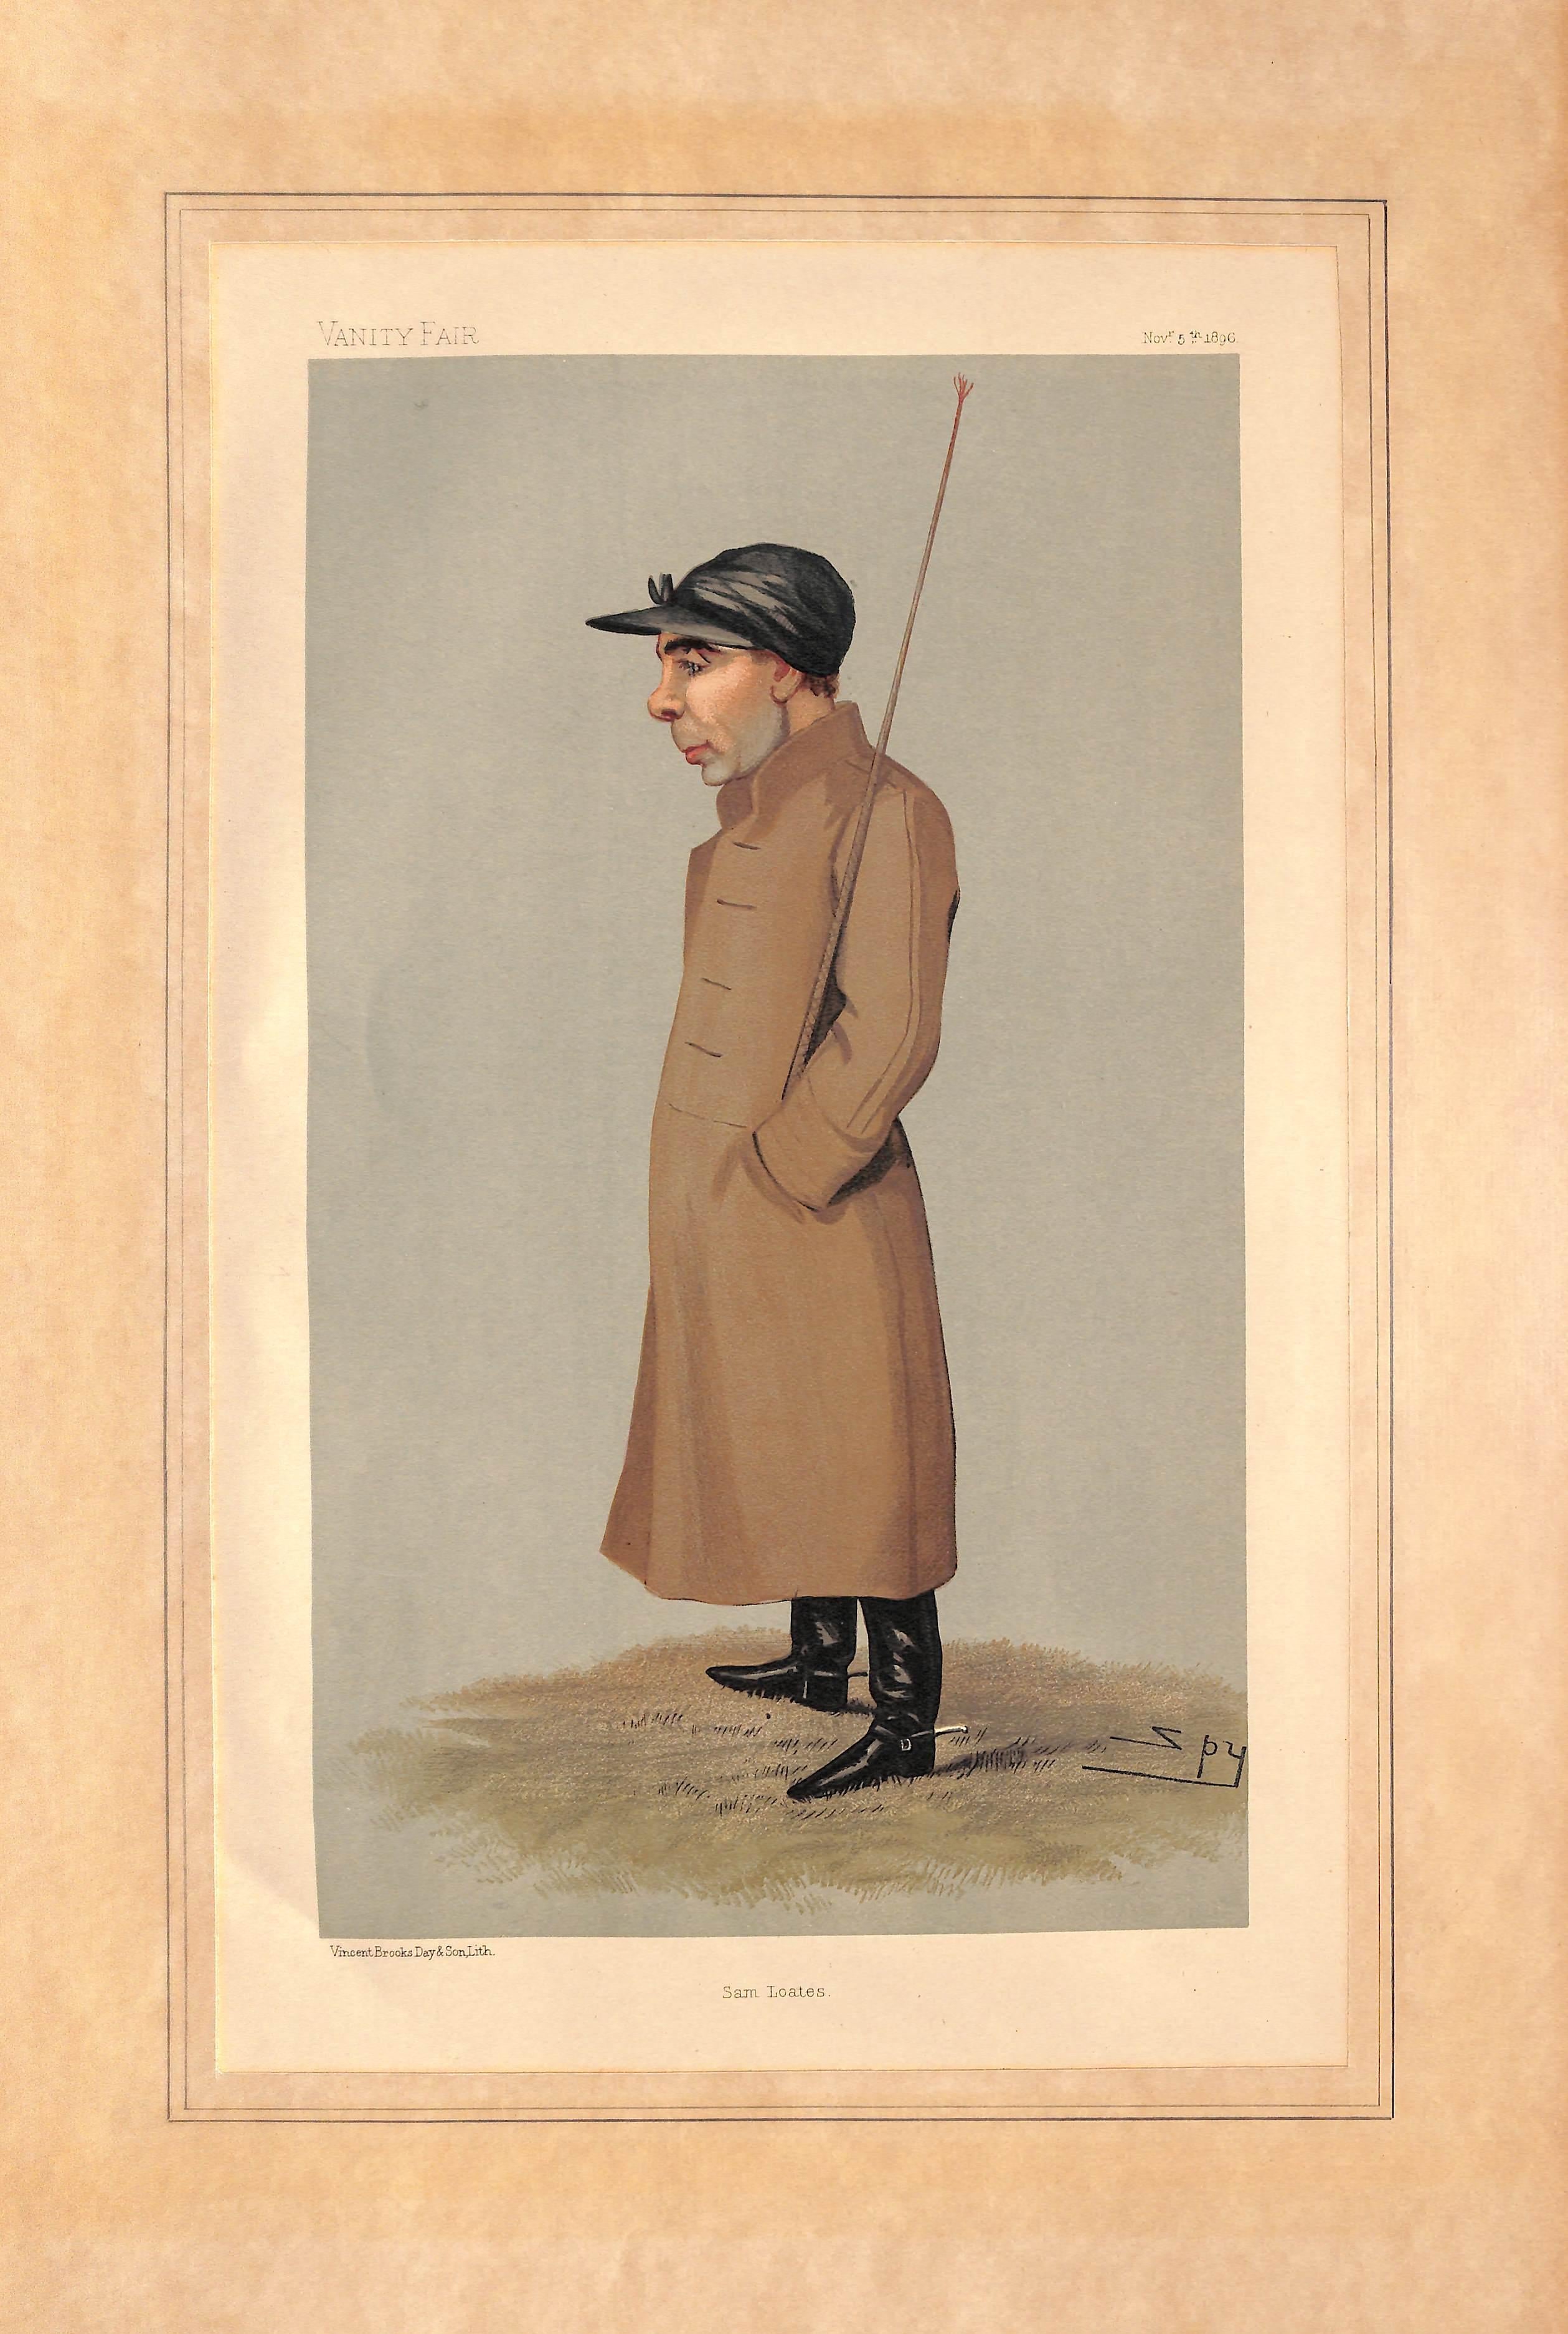 Unknown Figurative Print - Sam Loates Spy Vanity Fair Nov 5th 1896